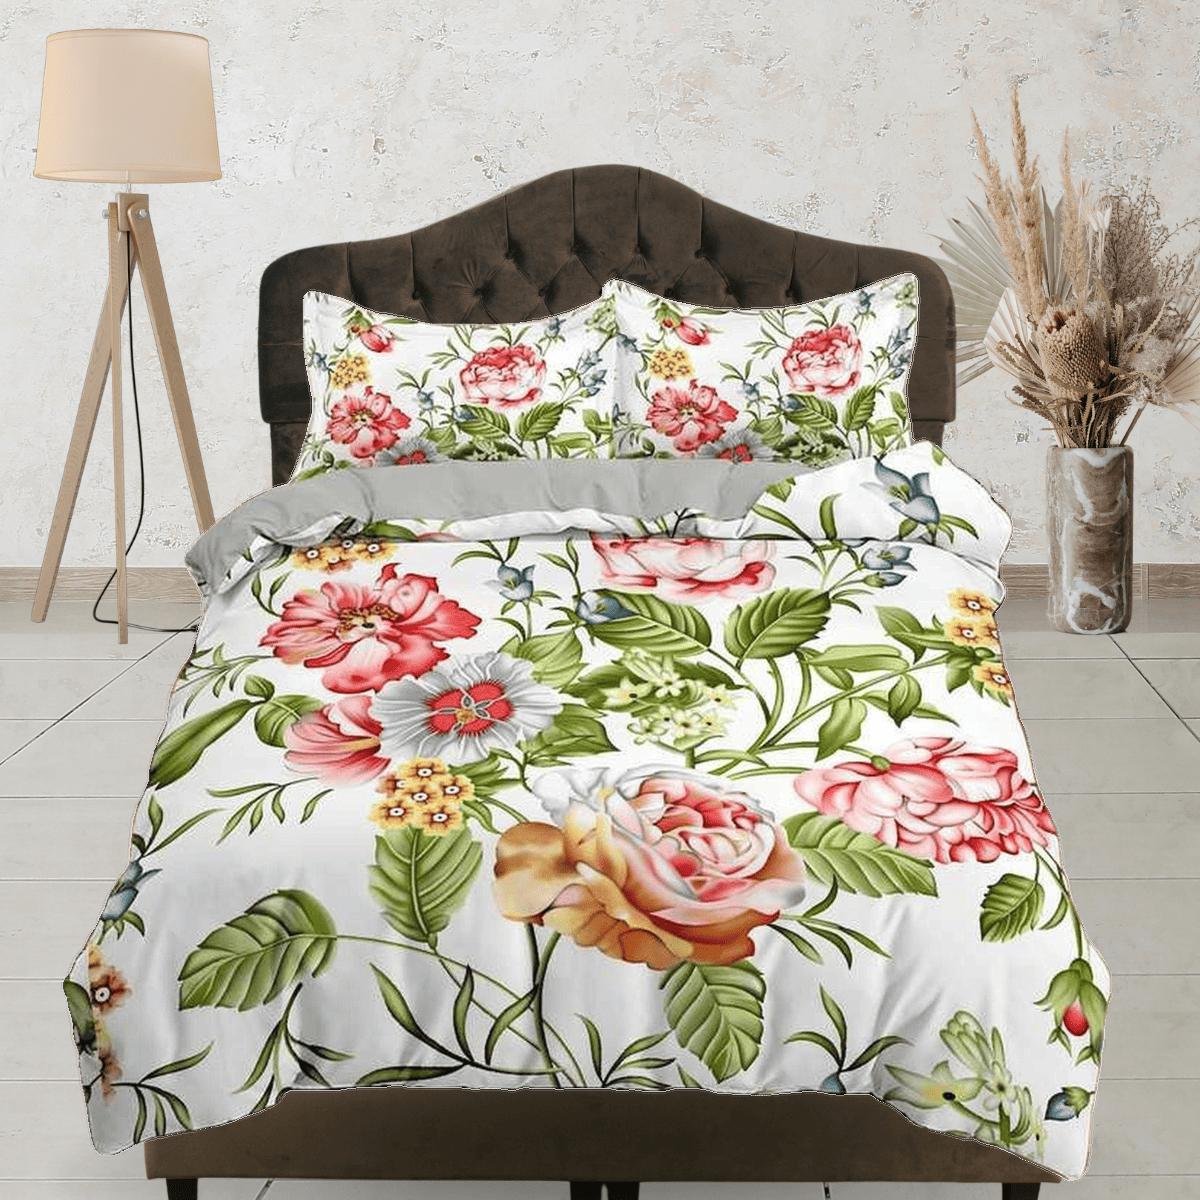 daintyduvet Shabby chic bedding floral duvet cover, teen girl bedroom, baby girl crib bedding boho maximalist bedspread aesthetic bedding